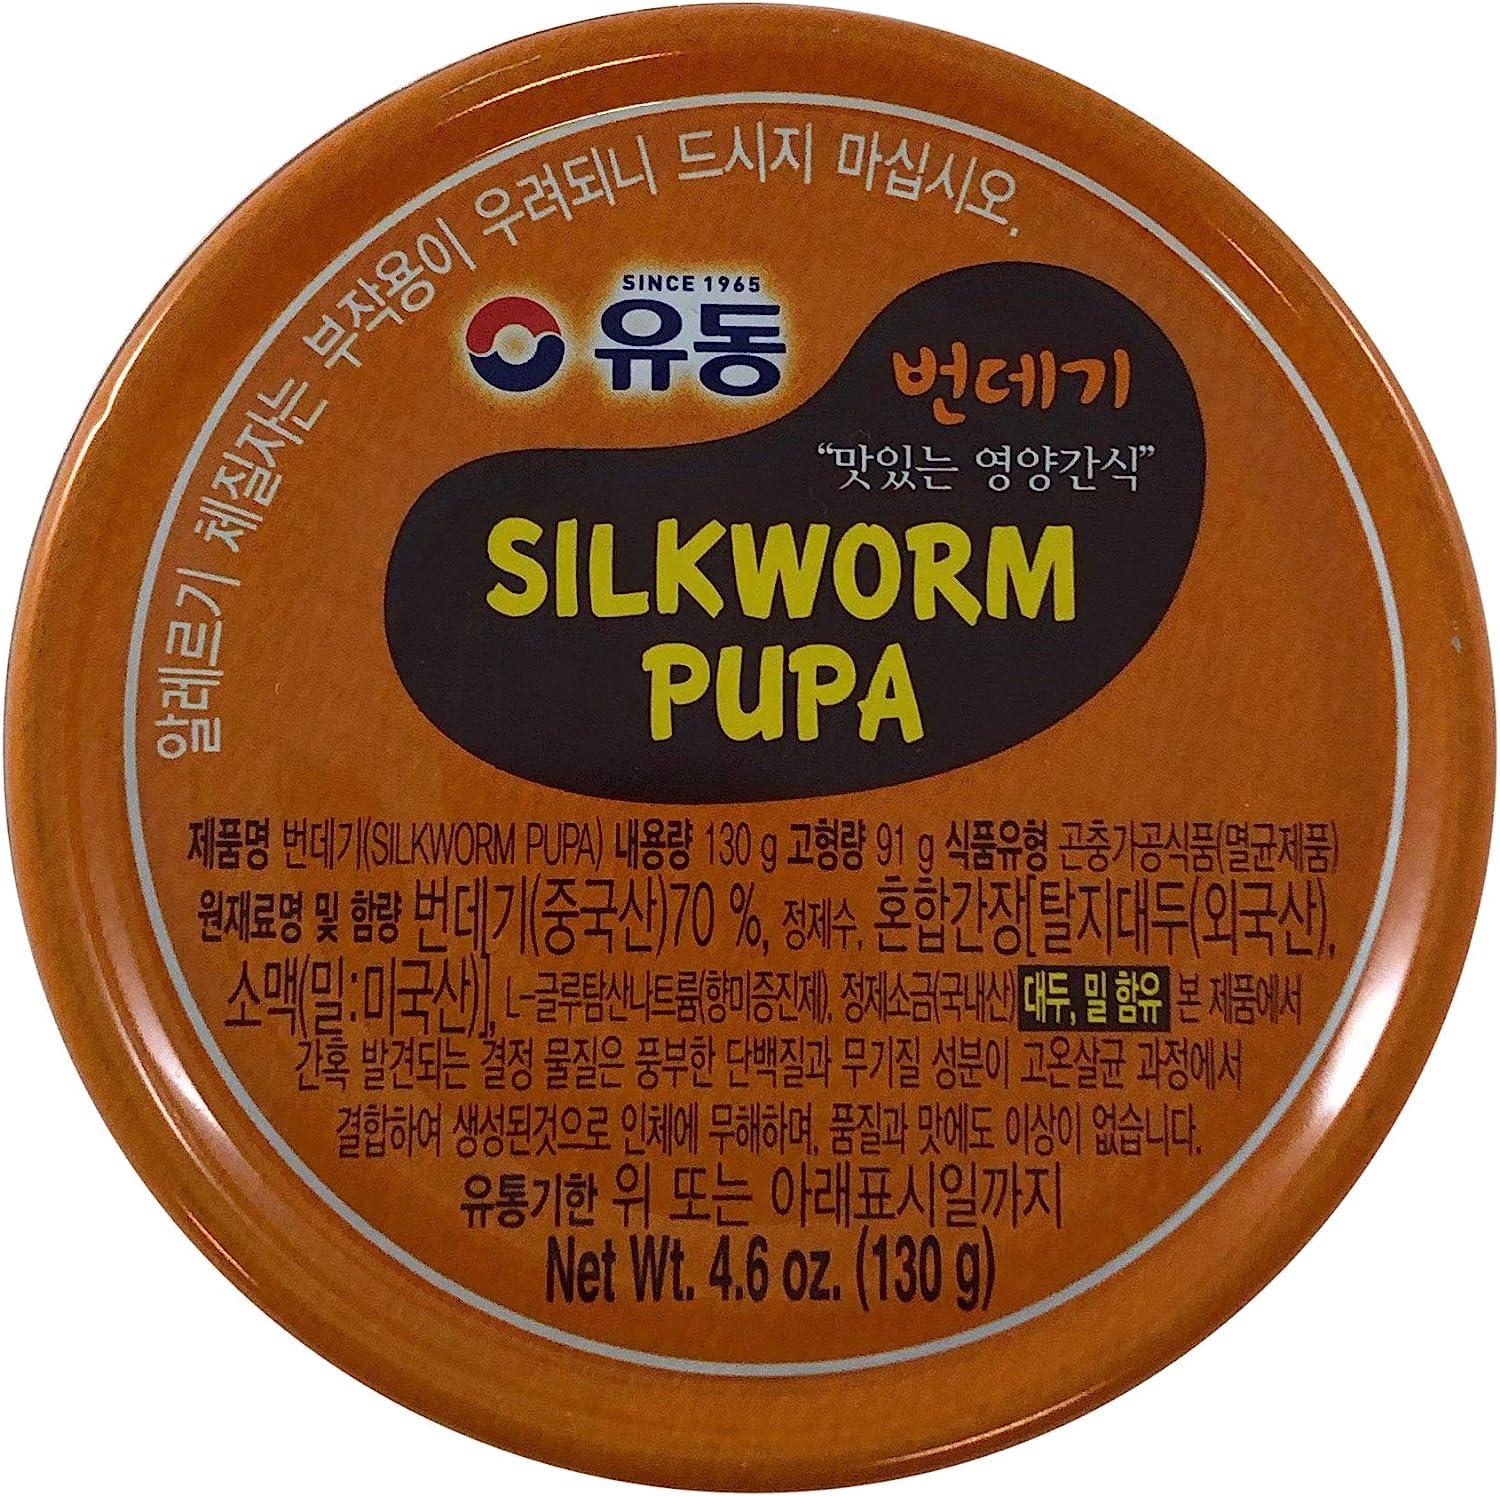 Yudong Silkworm Pupa - 130g/4.6oz